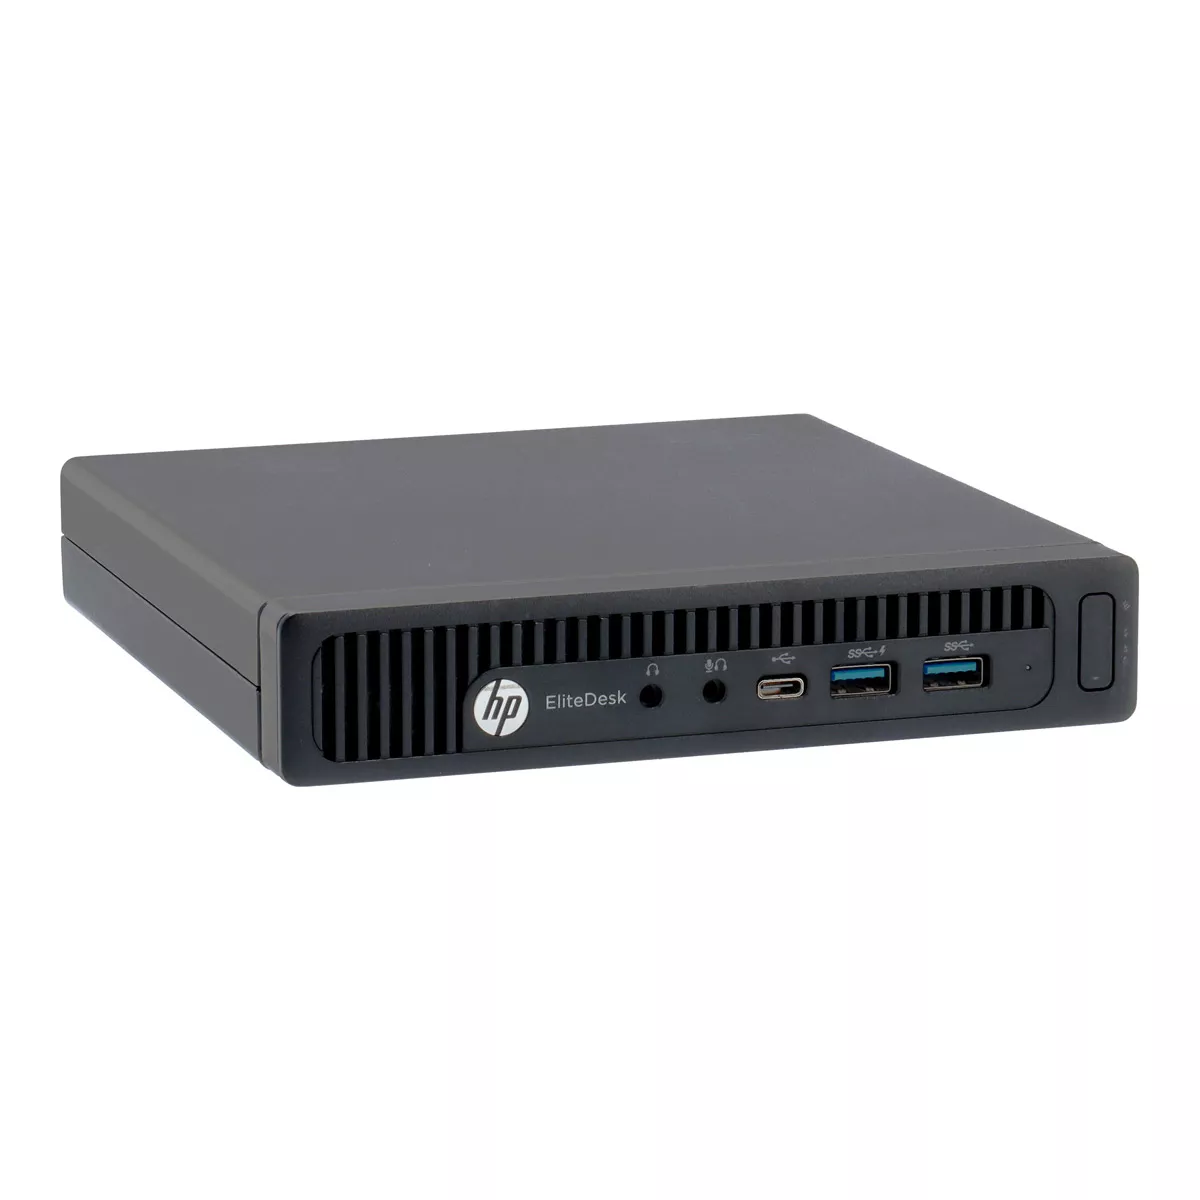 HP EliteDesk 800 G2 Mini Core i5 6500 3,20 GHz 240 GB SSD A+